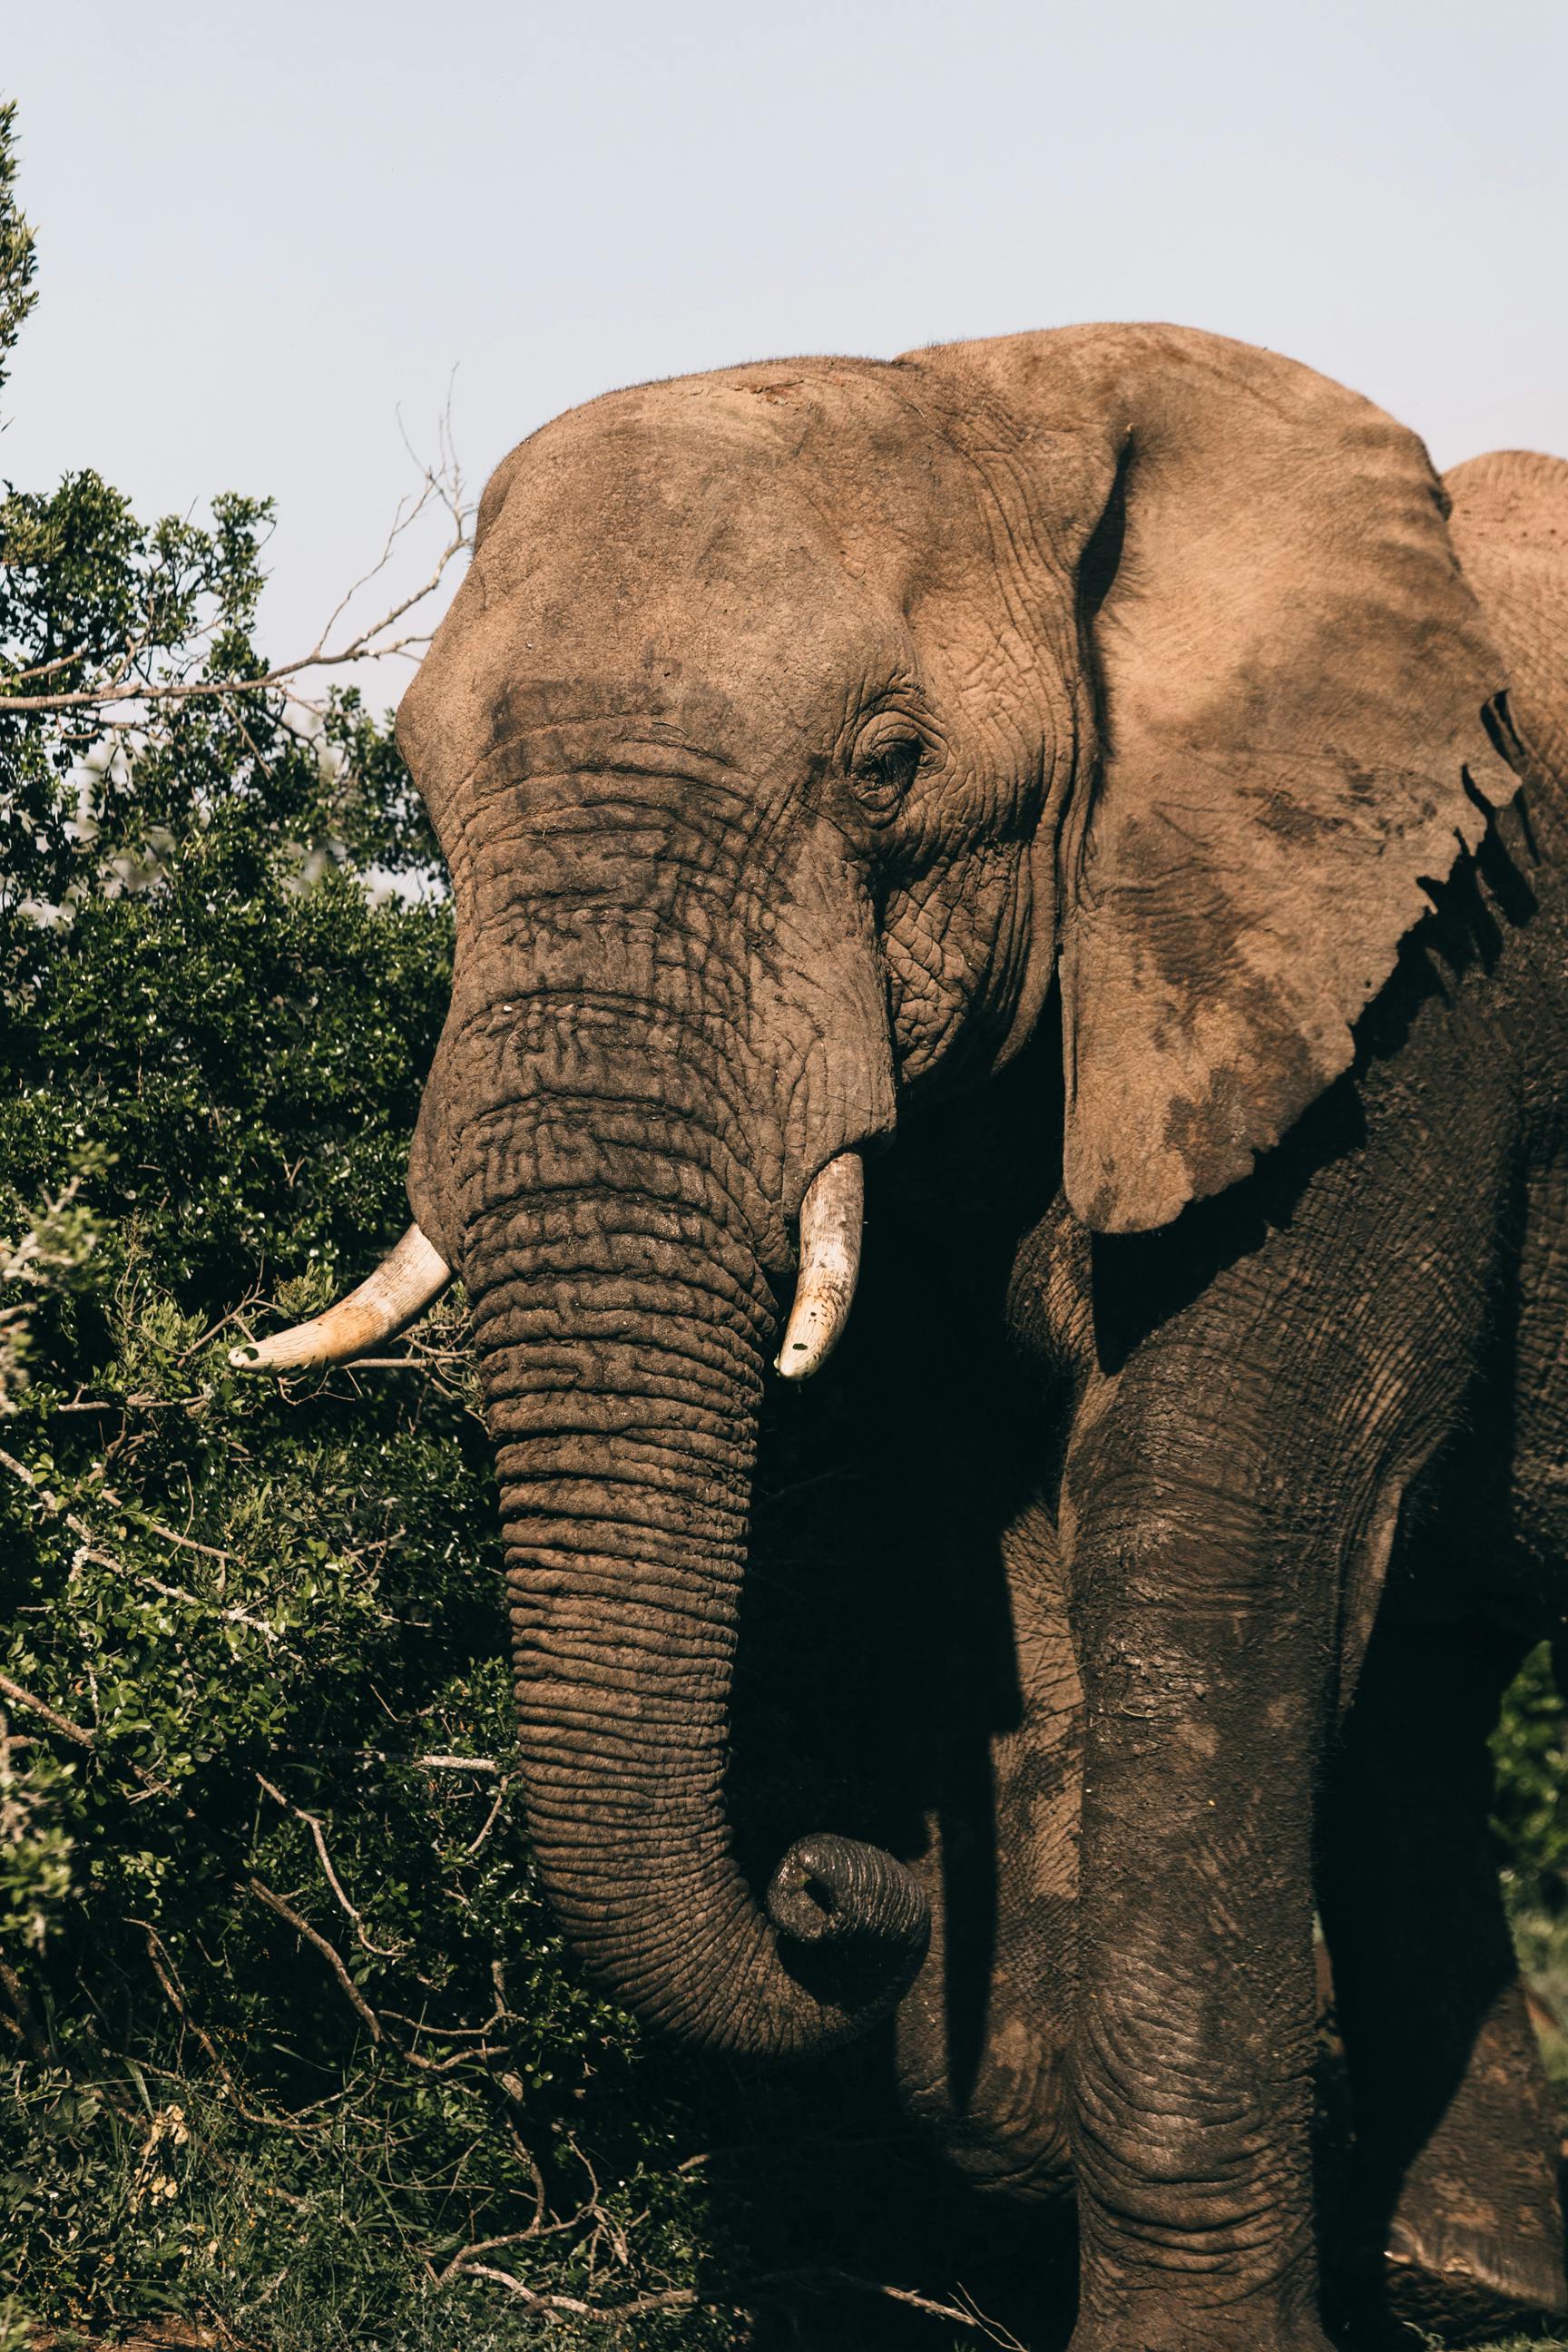 Elephant with long trunk near shrub on summer day · Free Stock Photo